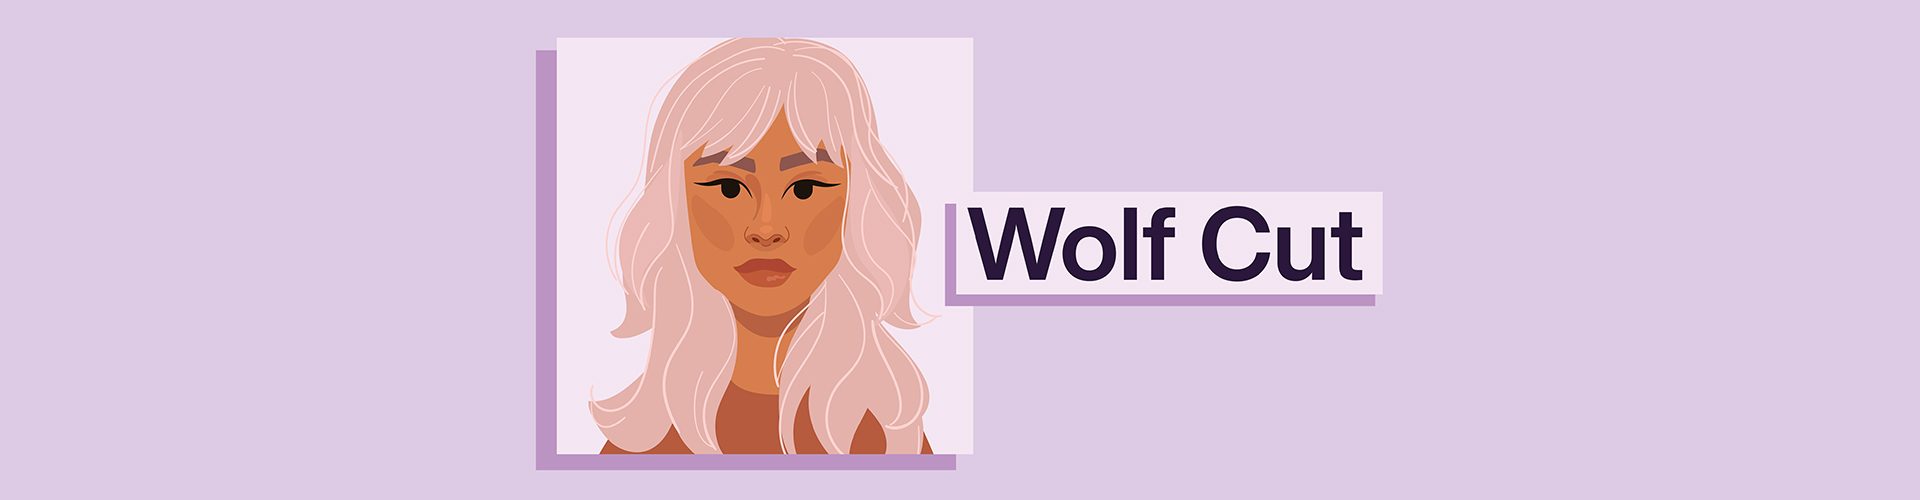 Wolf Cut: Conheça a nova tendência de corte feminino!